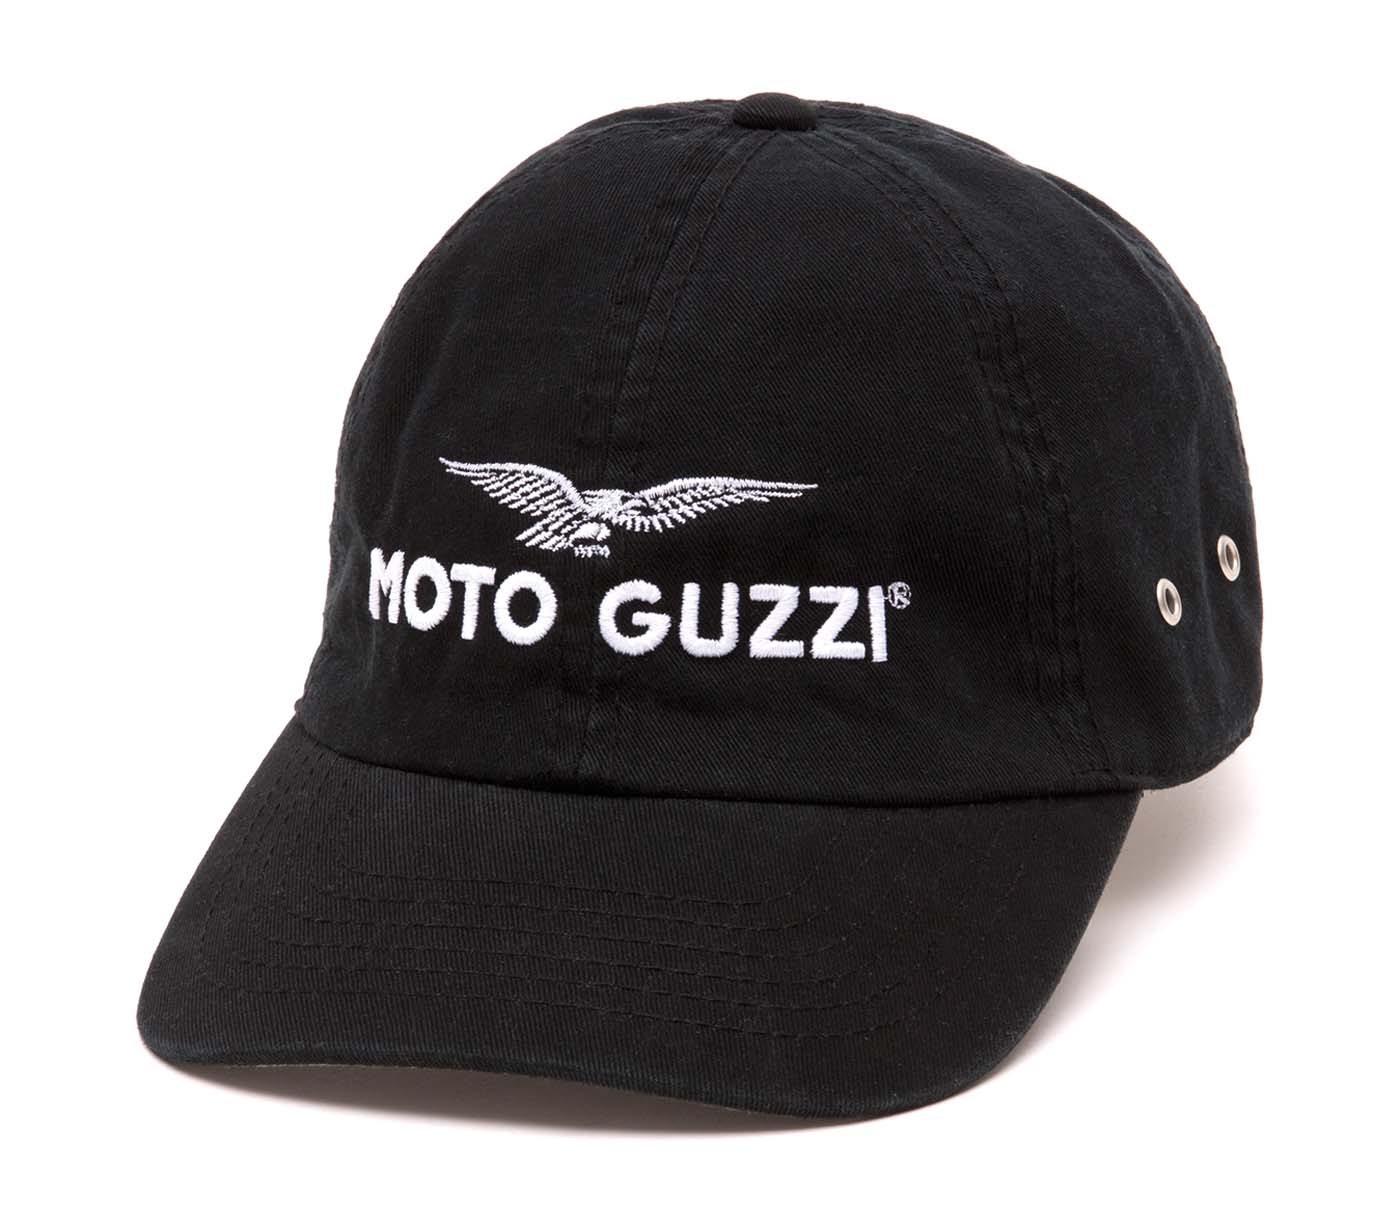 MOTO GUZZI BASEBALL CAP - GREY